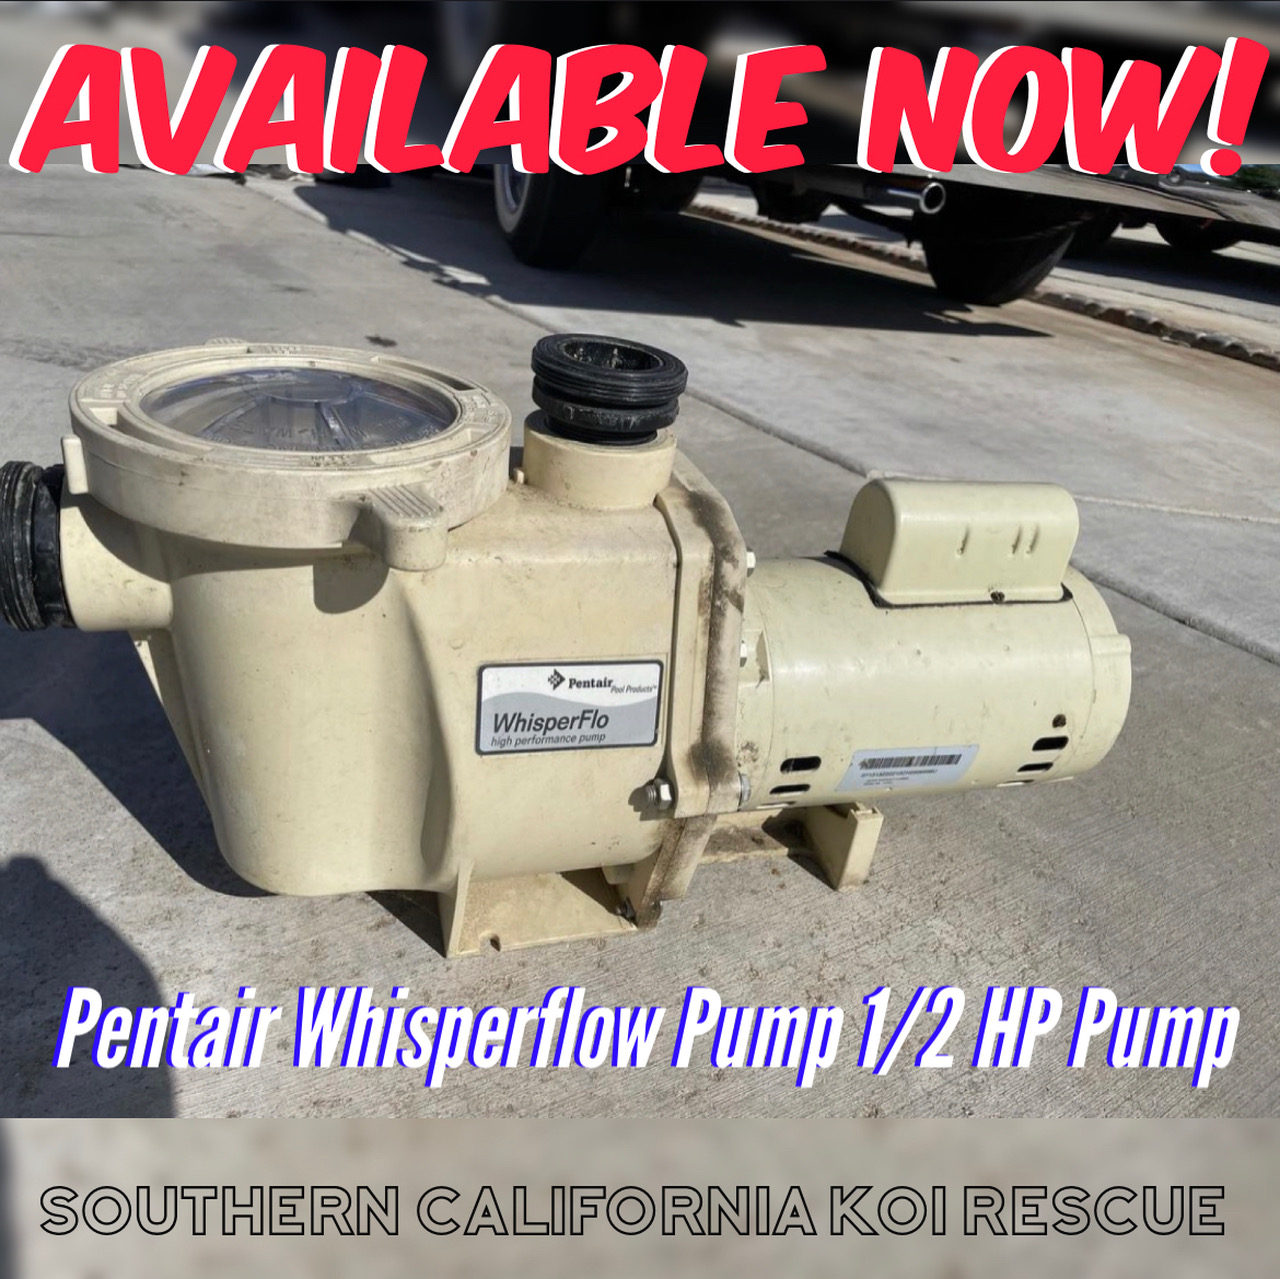 Pentair WhisperFlo 1/2 HP Pump - 220V (Used)